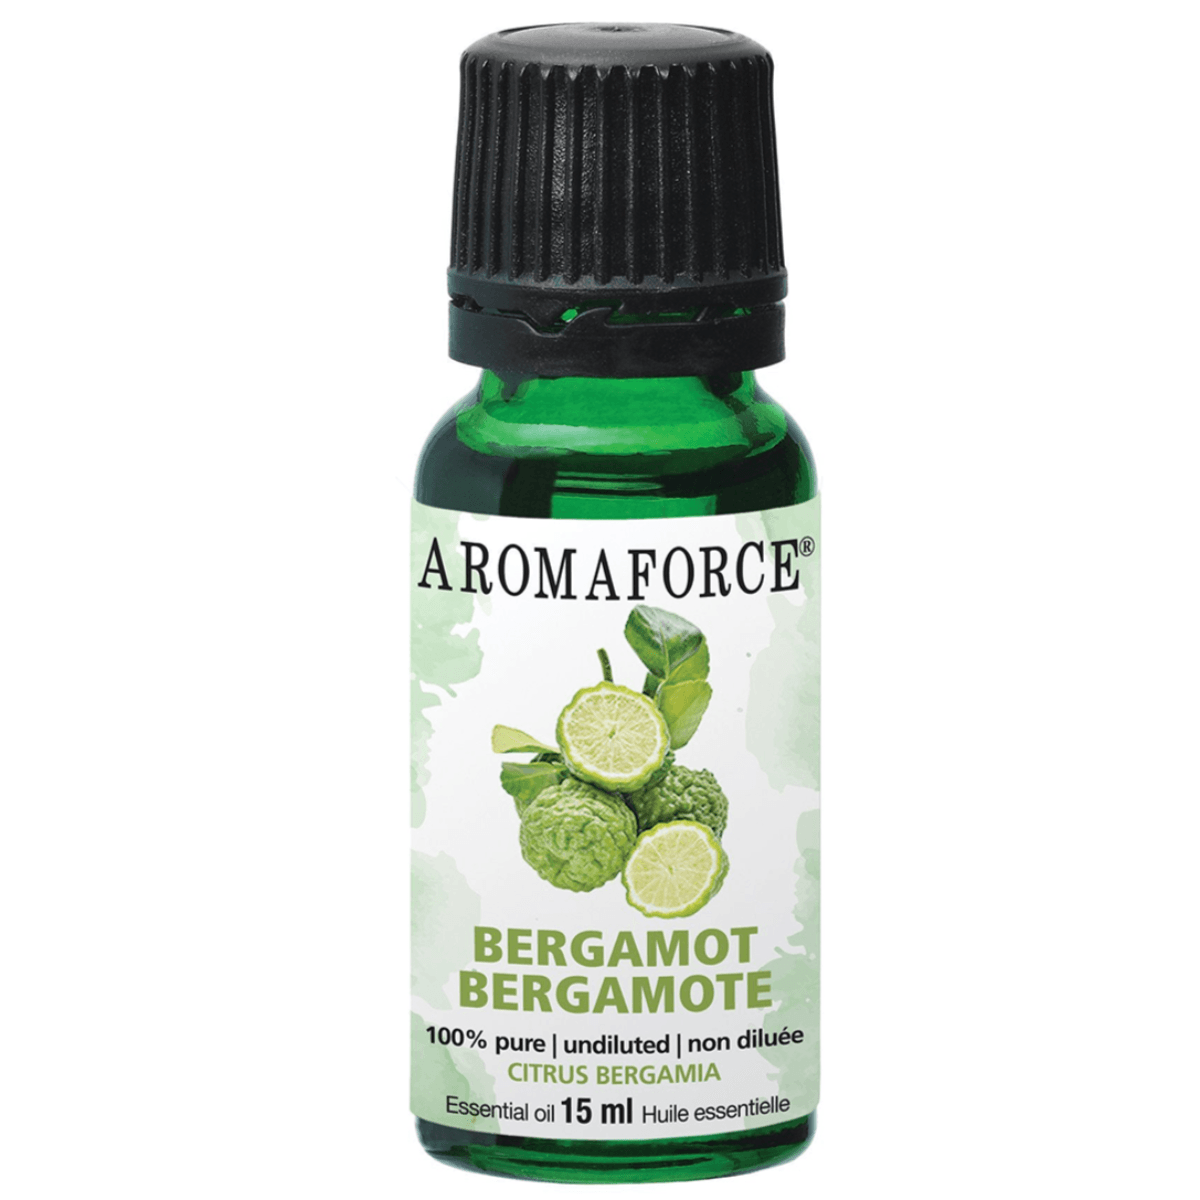 Aromaforce Essential Oil Bergamot 15mL Essential Oils at Village Vitamin Store